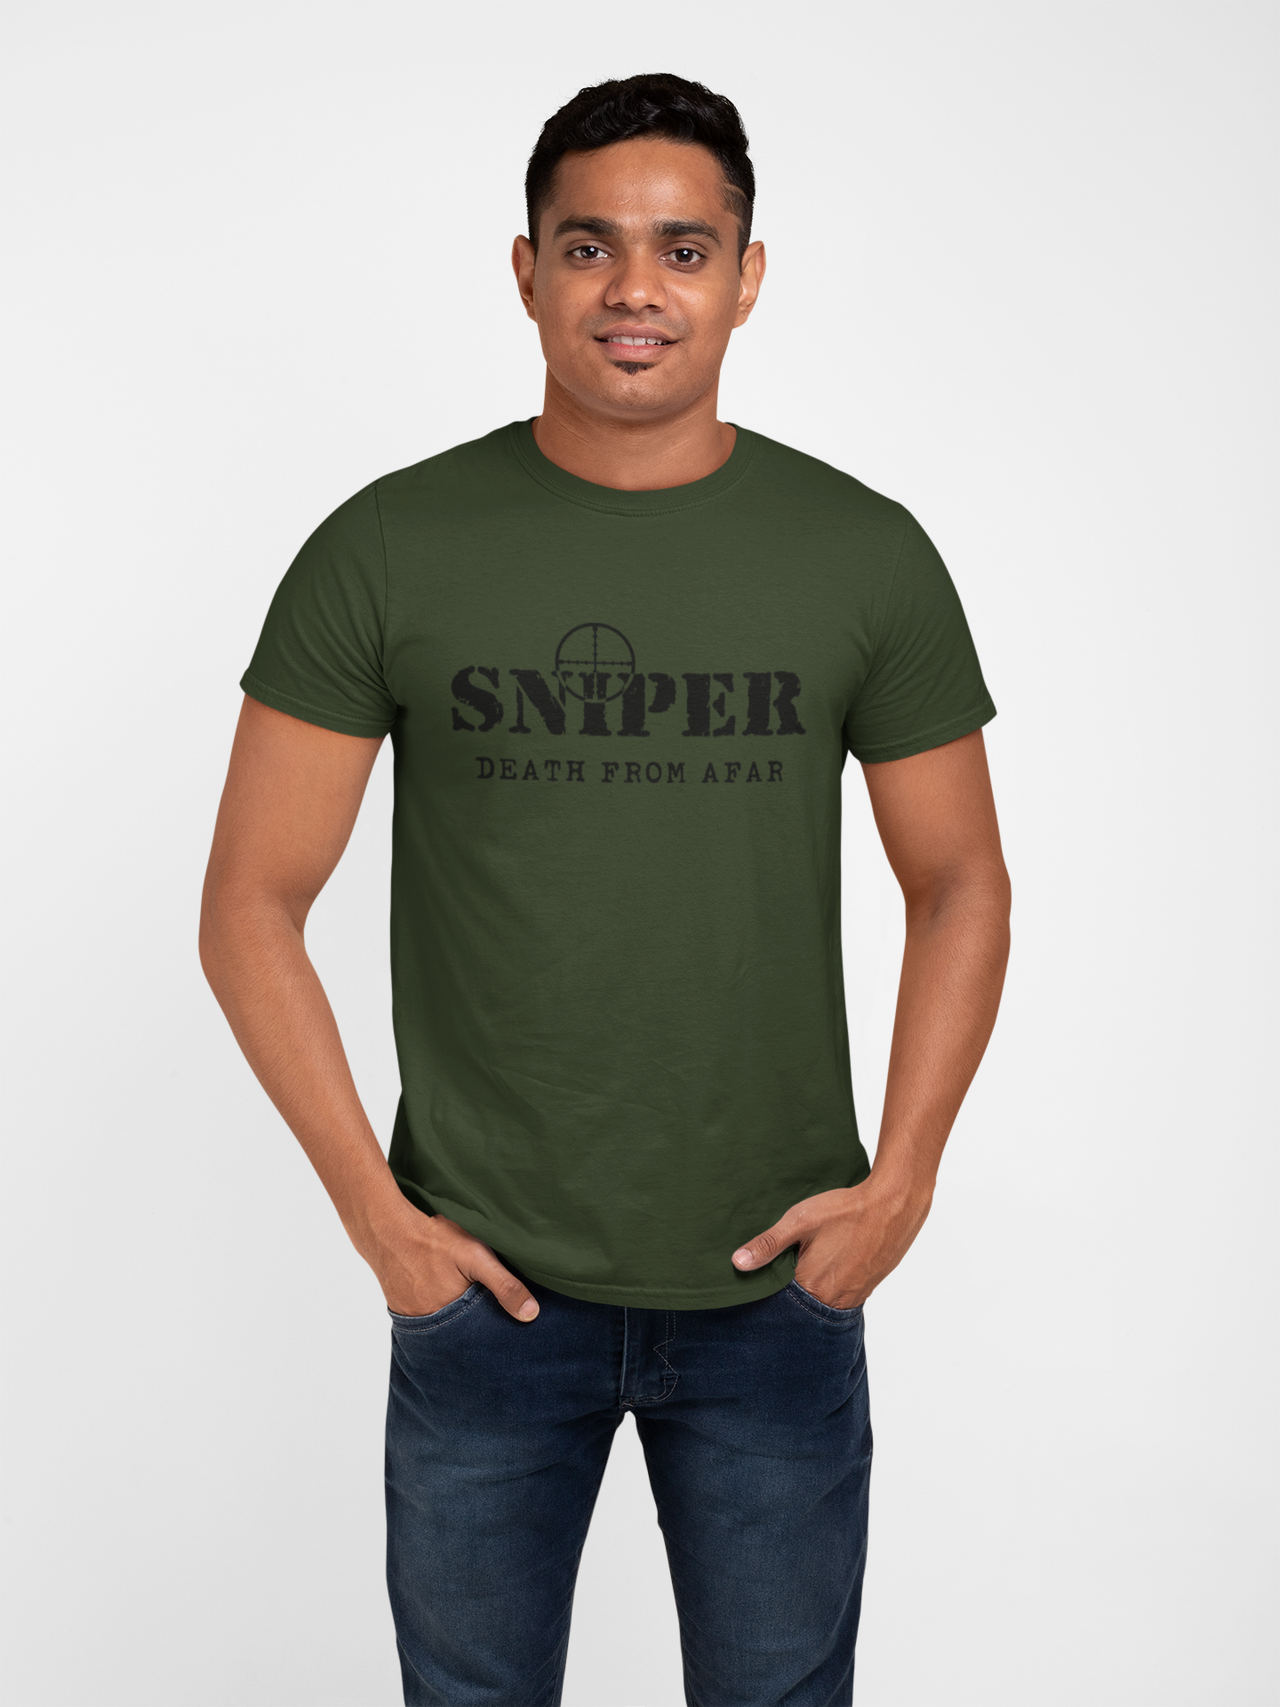 Sniper T-shirt - Sniper, Death From Afar (Men)